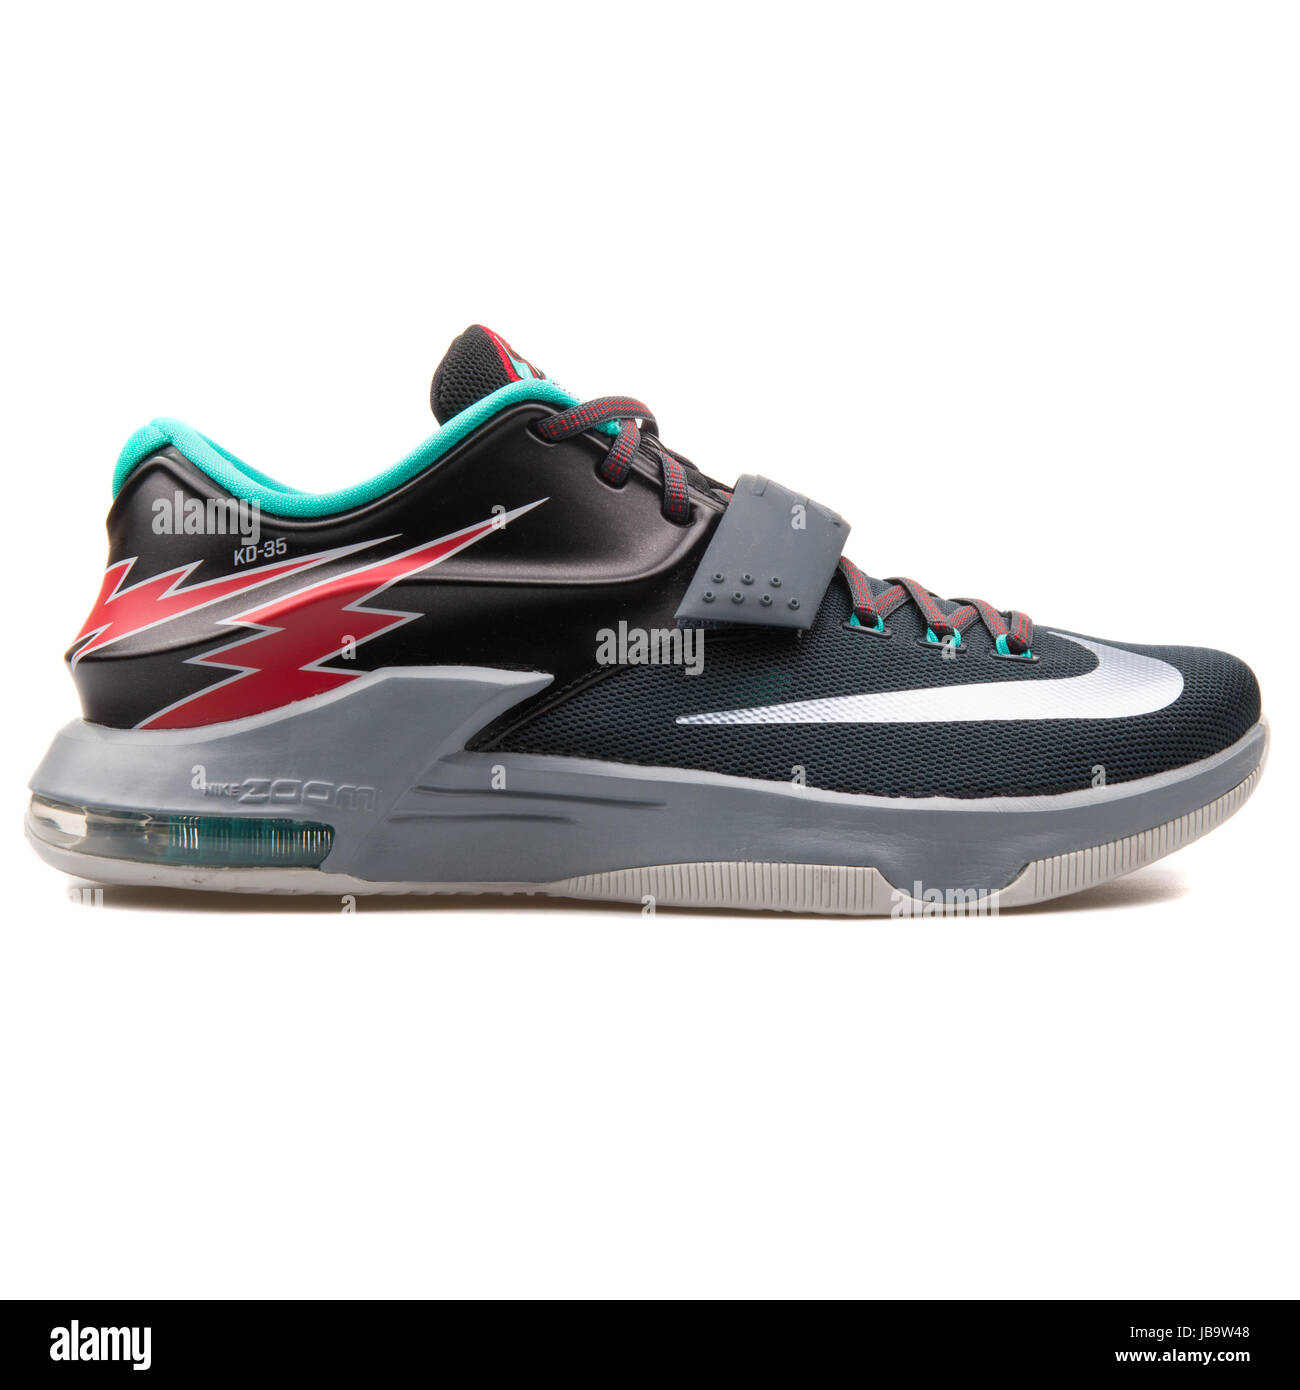 La oficina módulo Padre fage Nike KD VII Black, Grey, Green and Red Men's Basketball Shoes - 653996-005  Stock Photo - Alamy